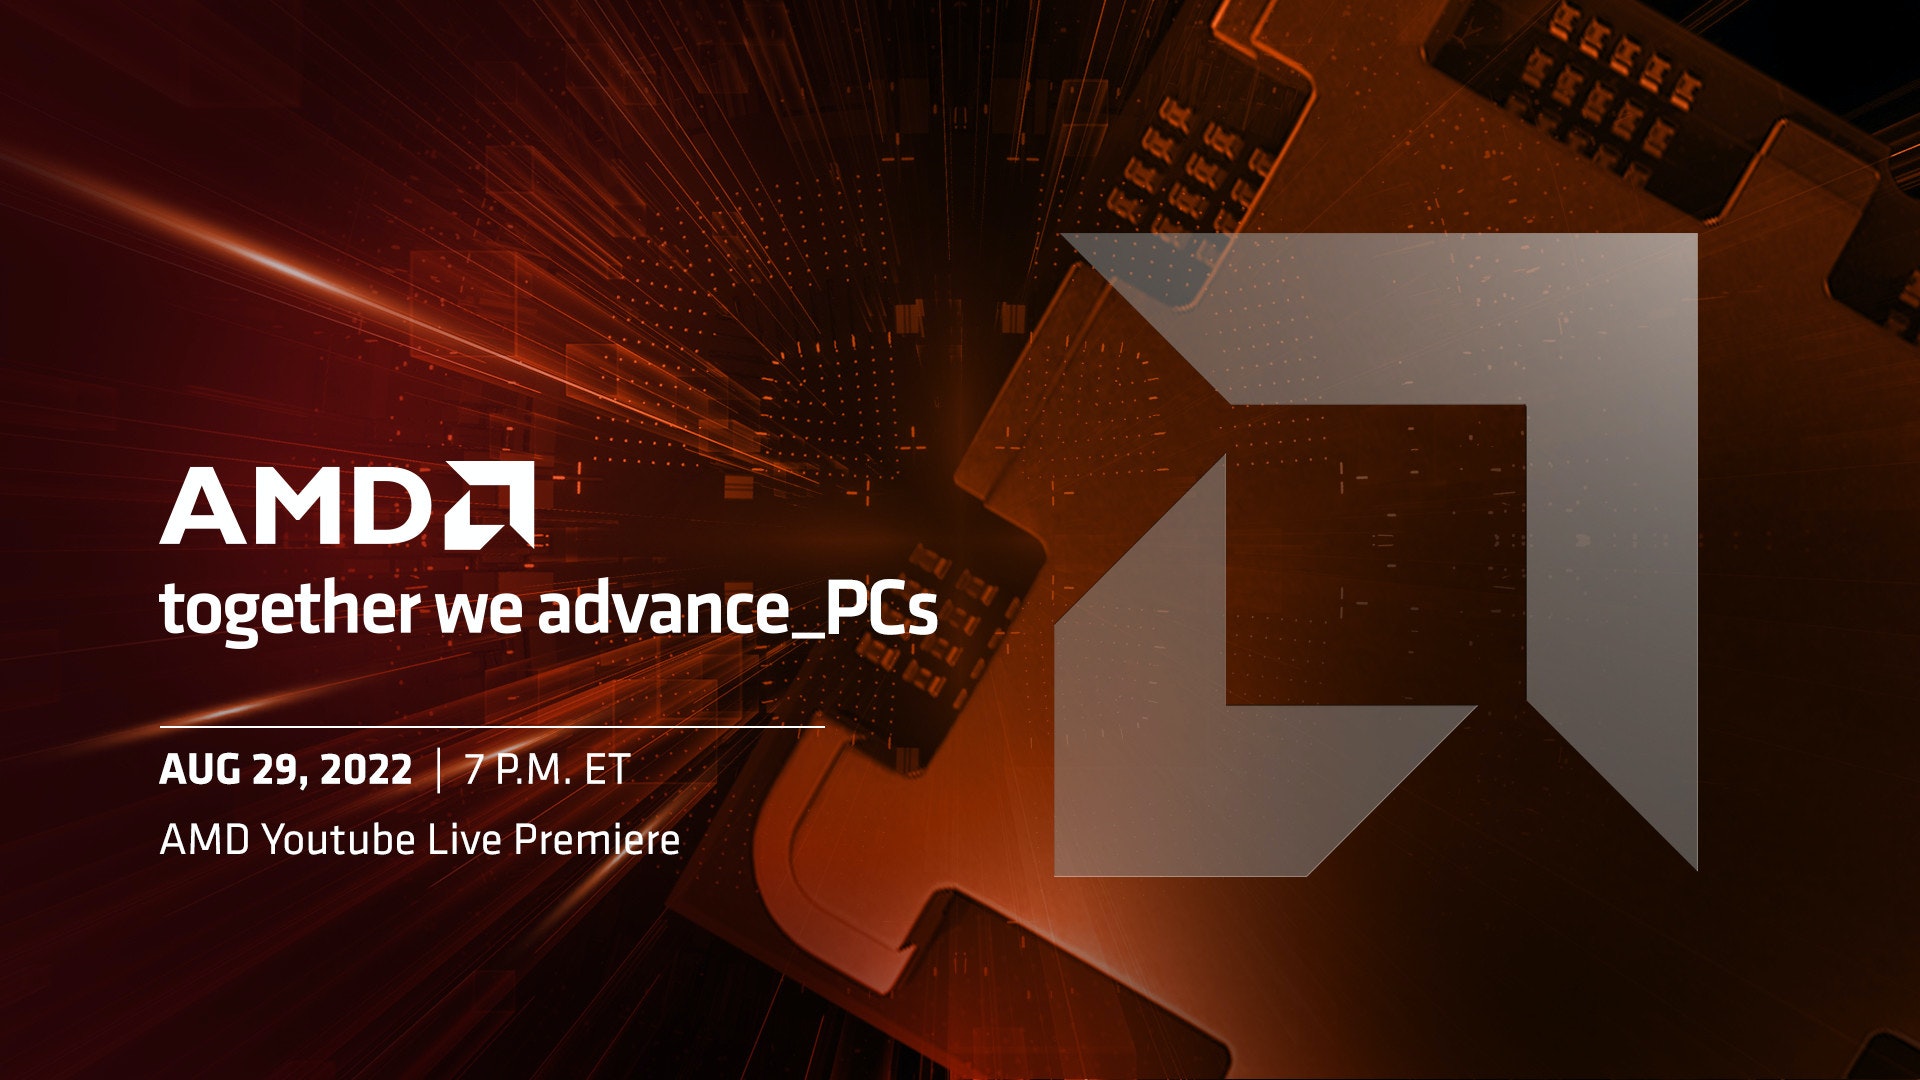 照片中提到了AMD、together we advance_PCs、AUG 29, 2022 | 7 P.M. ET，跟Advanced Micro Devices公司有關，包含了AMD A10、平面設計、光、字形、設計